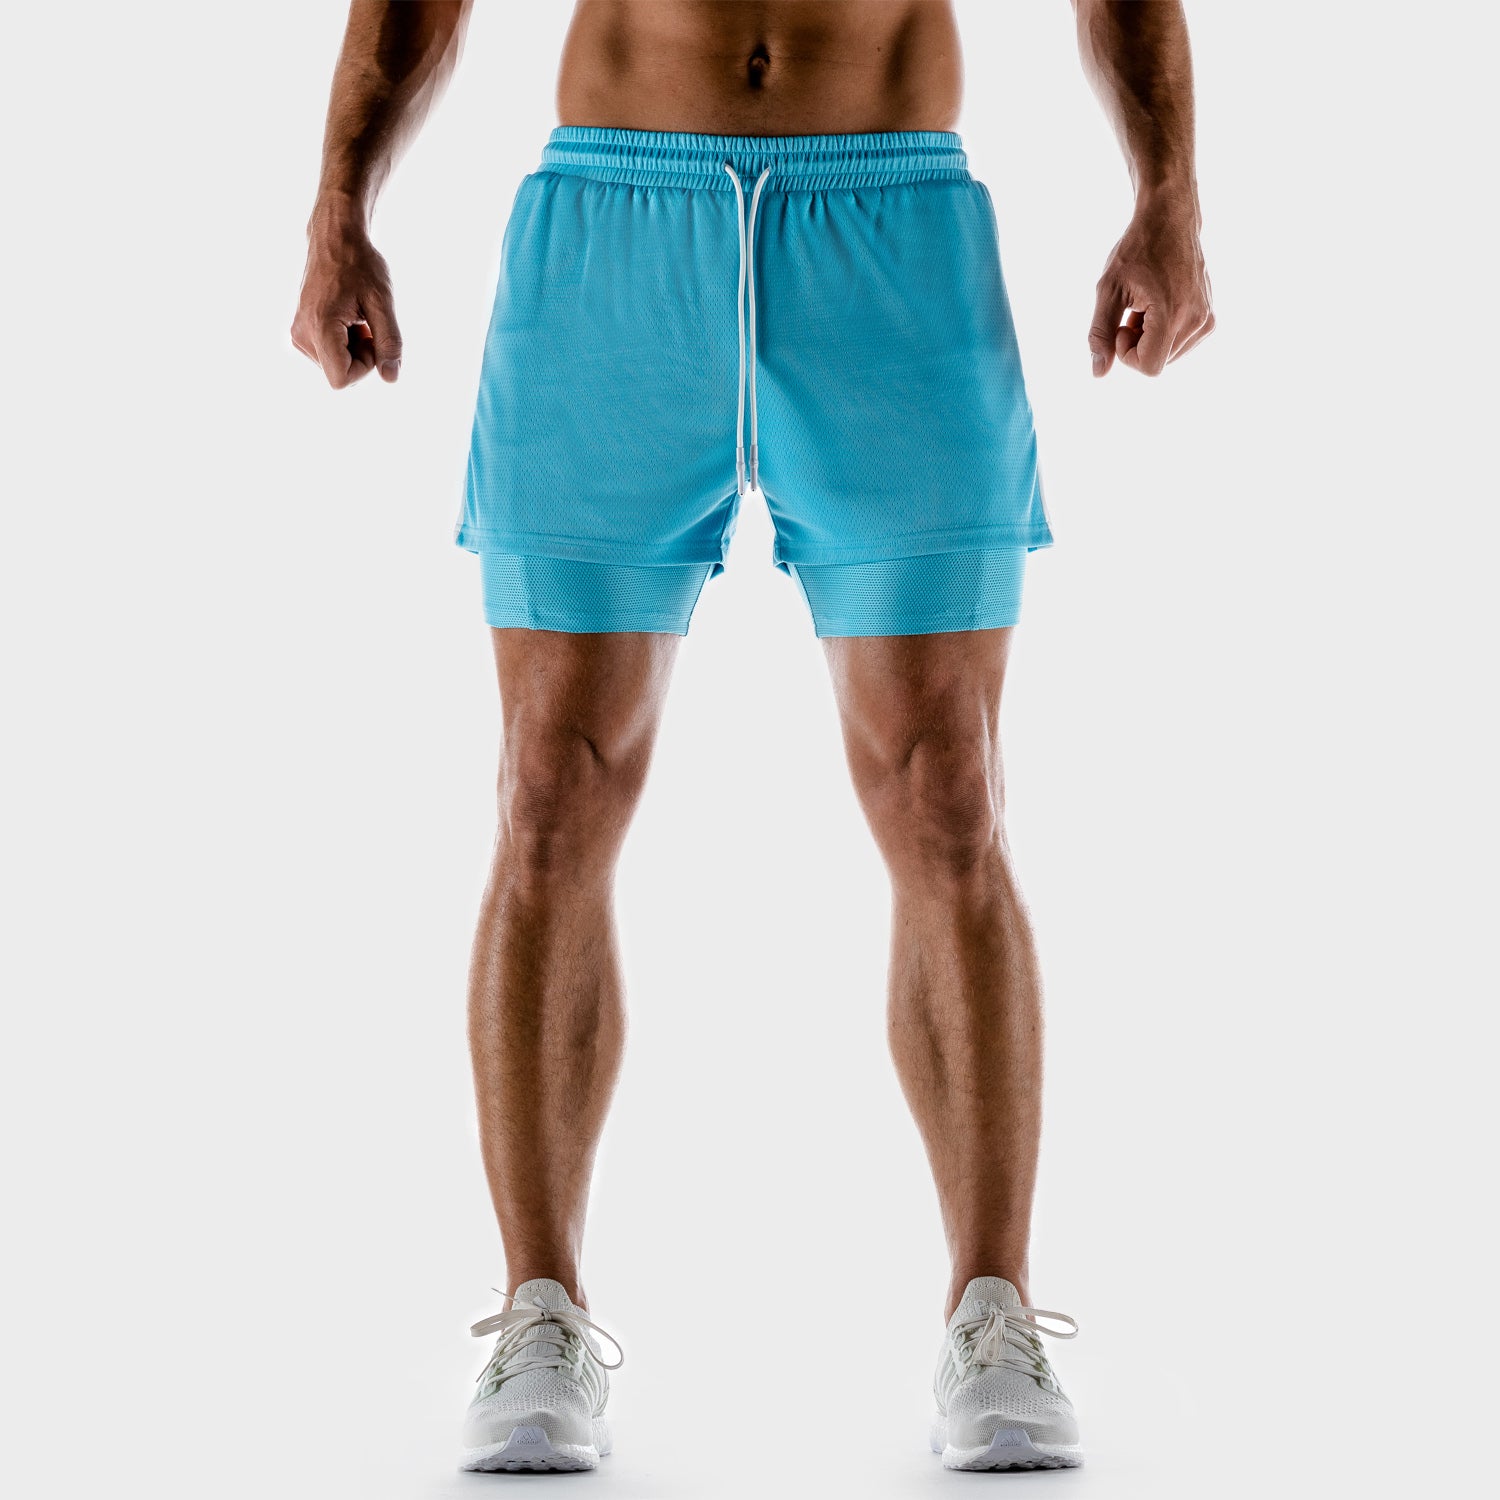 AE | Hybrid Performance 2-in-1 Shorts - Blue | Gym Shorts Men | SQUATWOLF